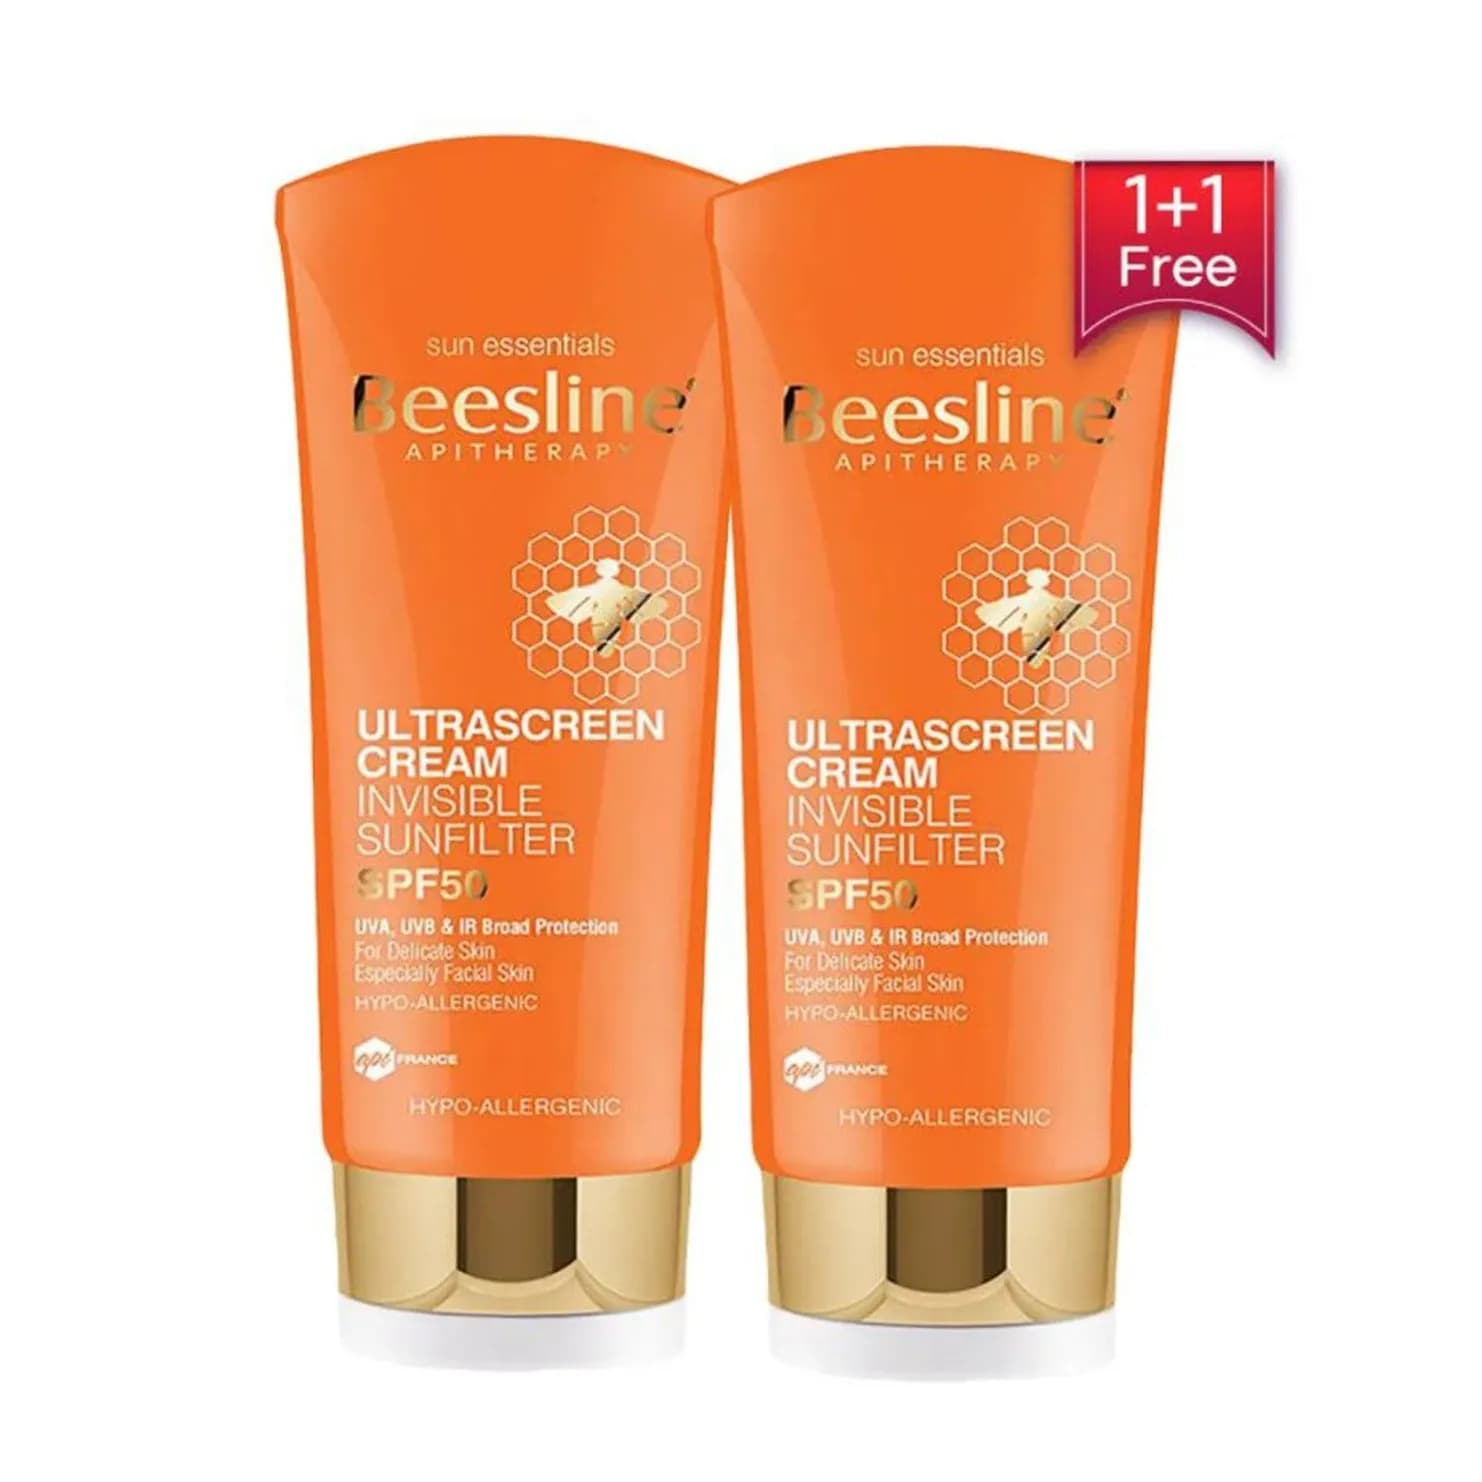 Beesline Ultrascreen Cream Invisible Sun Filter 1+1 Free